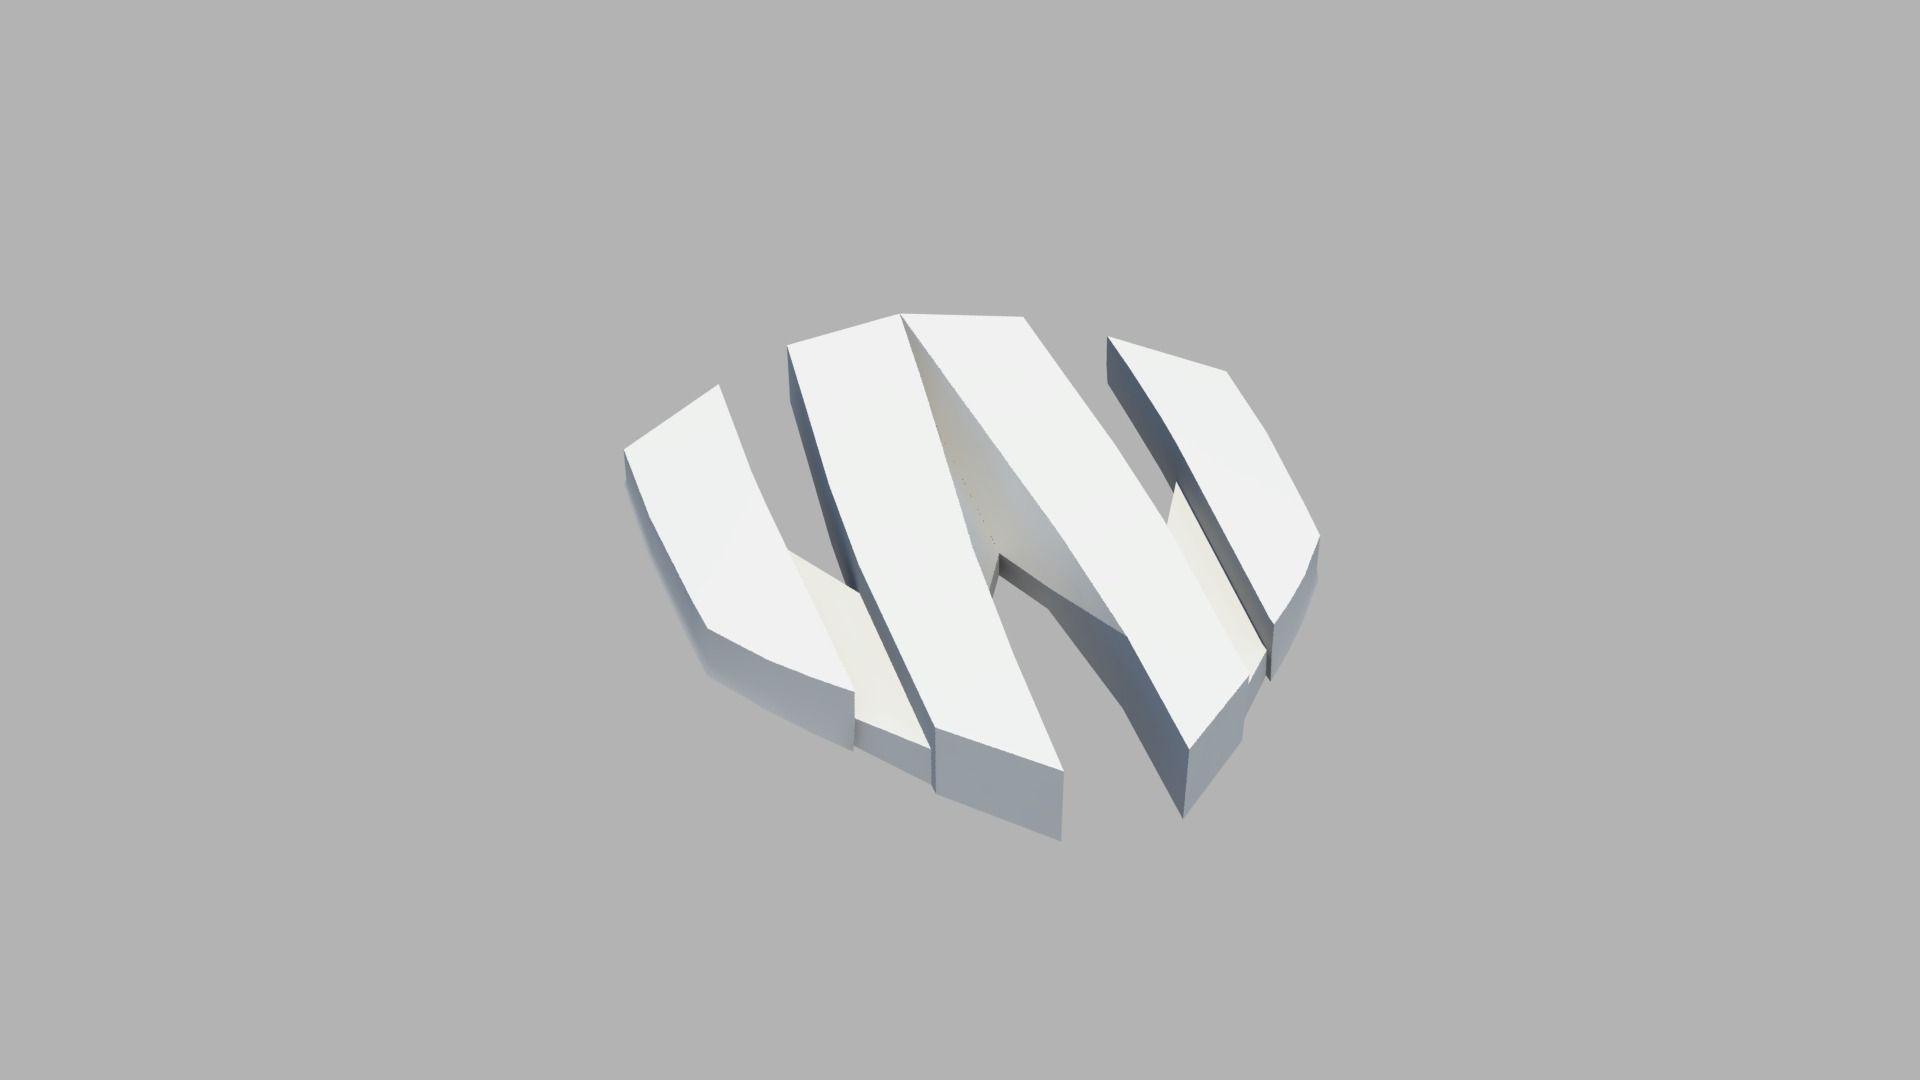 W Motors Logo - W Motors Logo Wallpapers - Wallpaper Cave